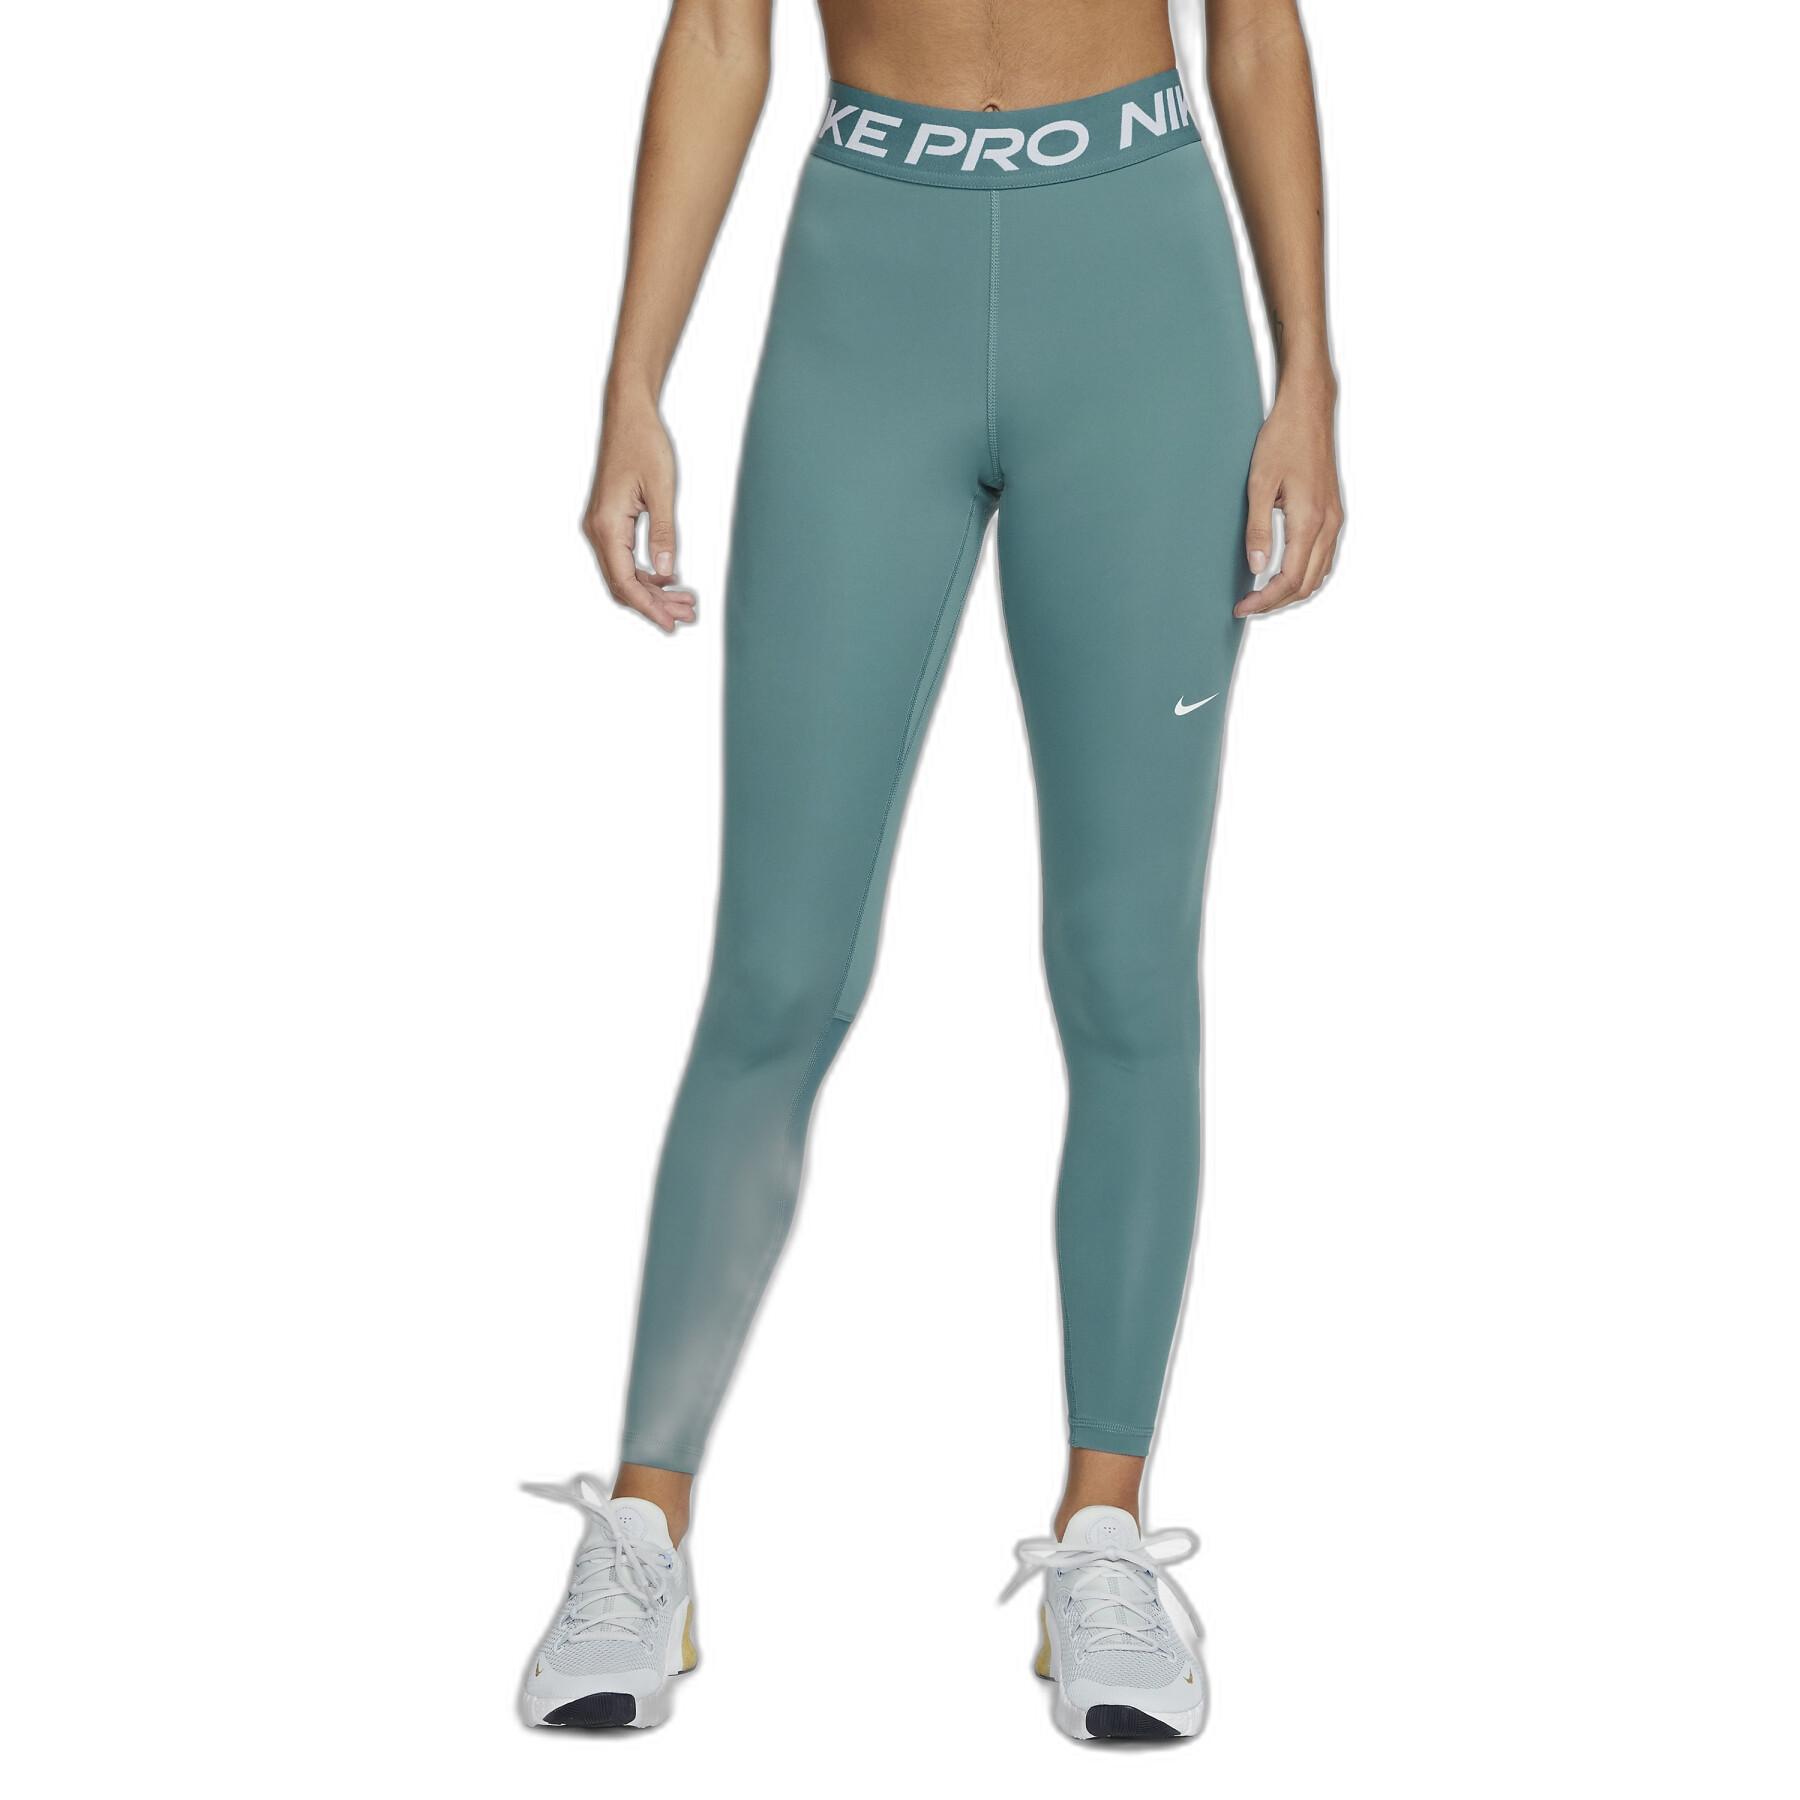 Legging woman Nike Pro 365 - Leggings - Women's clothing - Fitness